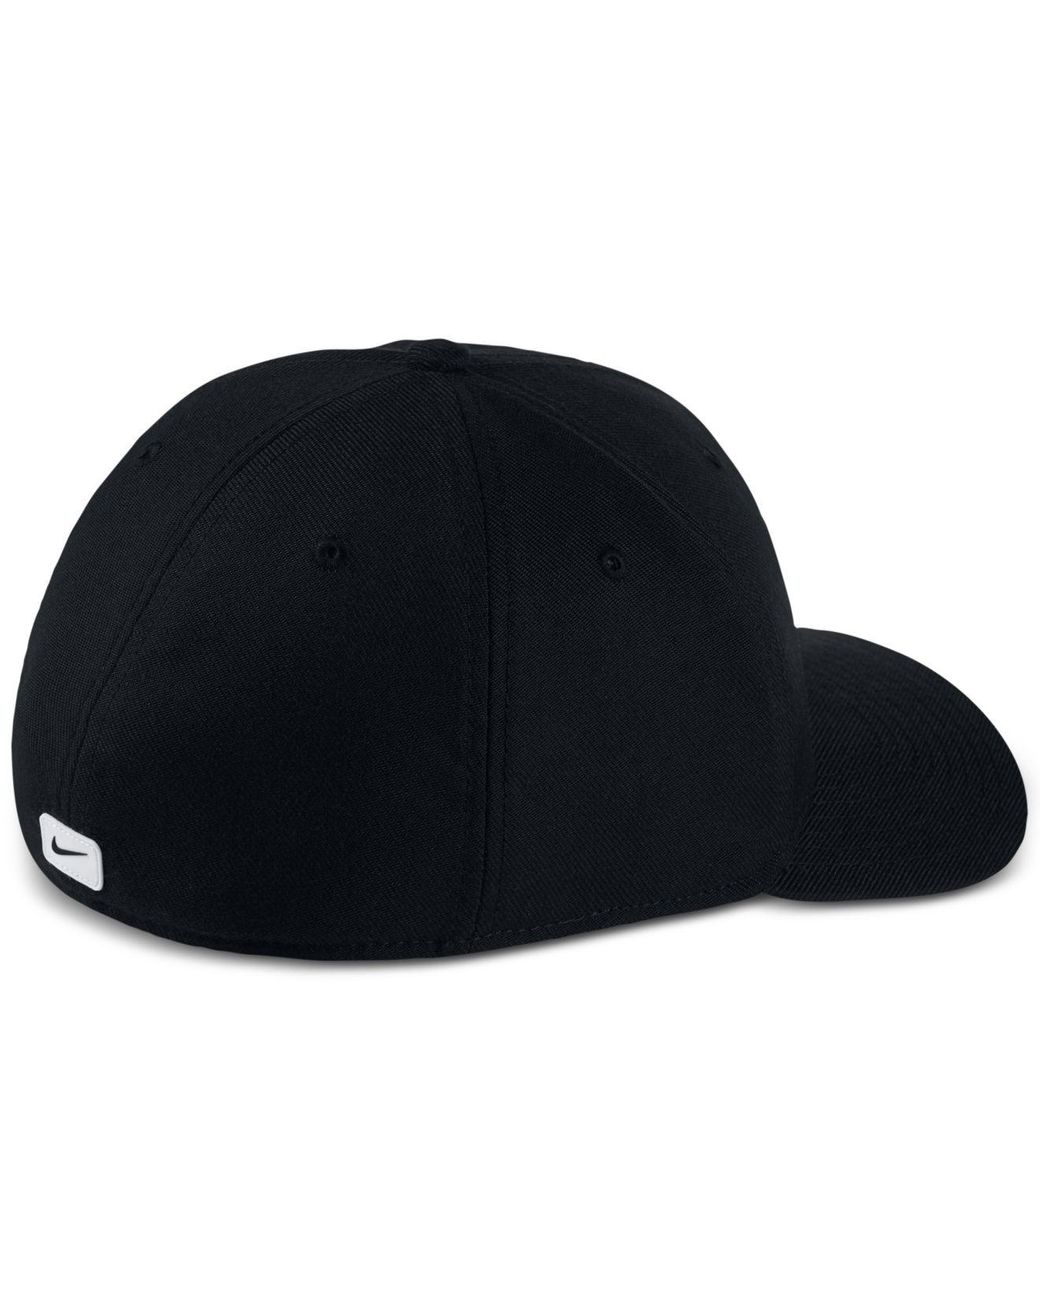 Nike Sportswear Dri-fit Stretch Fit Hat in Black Men | Lyst